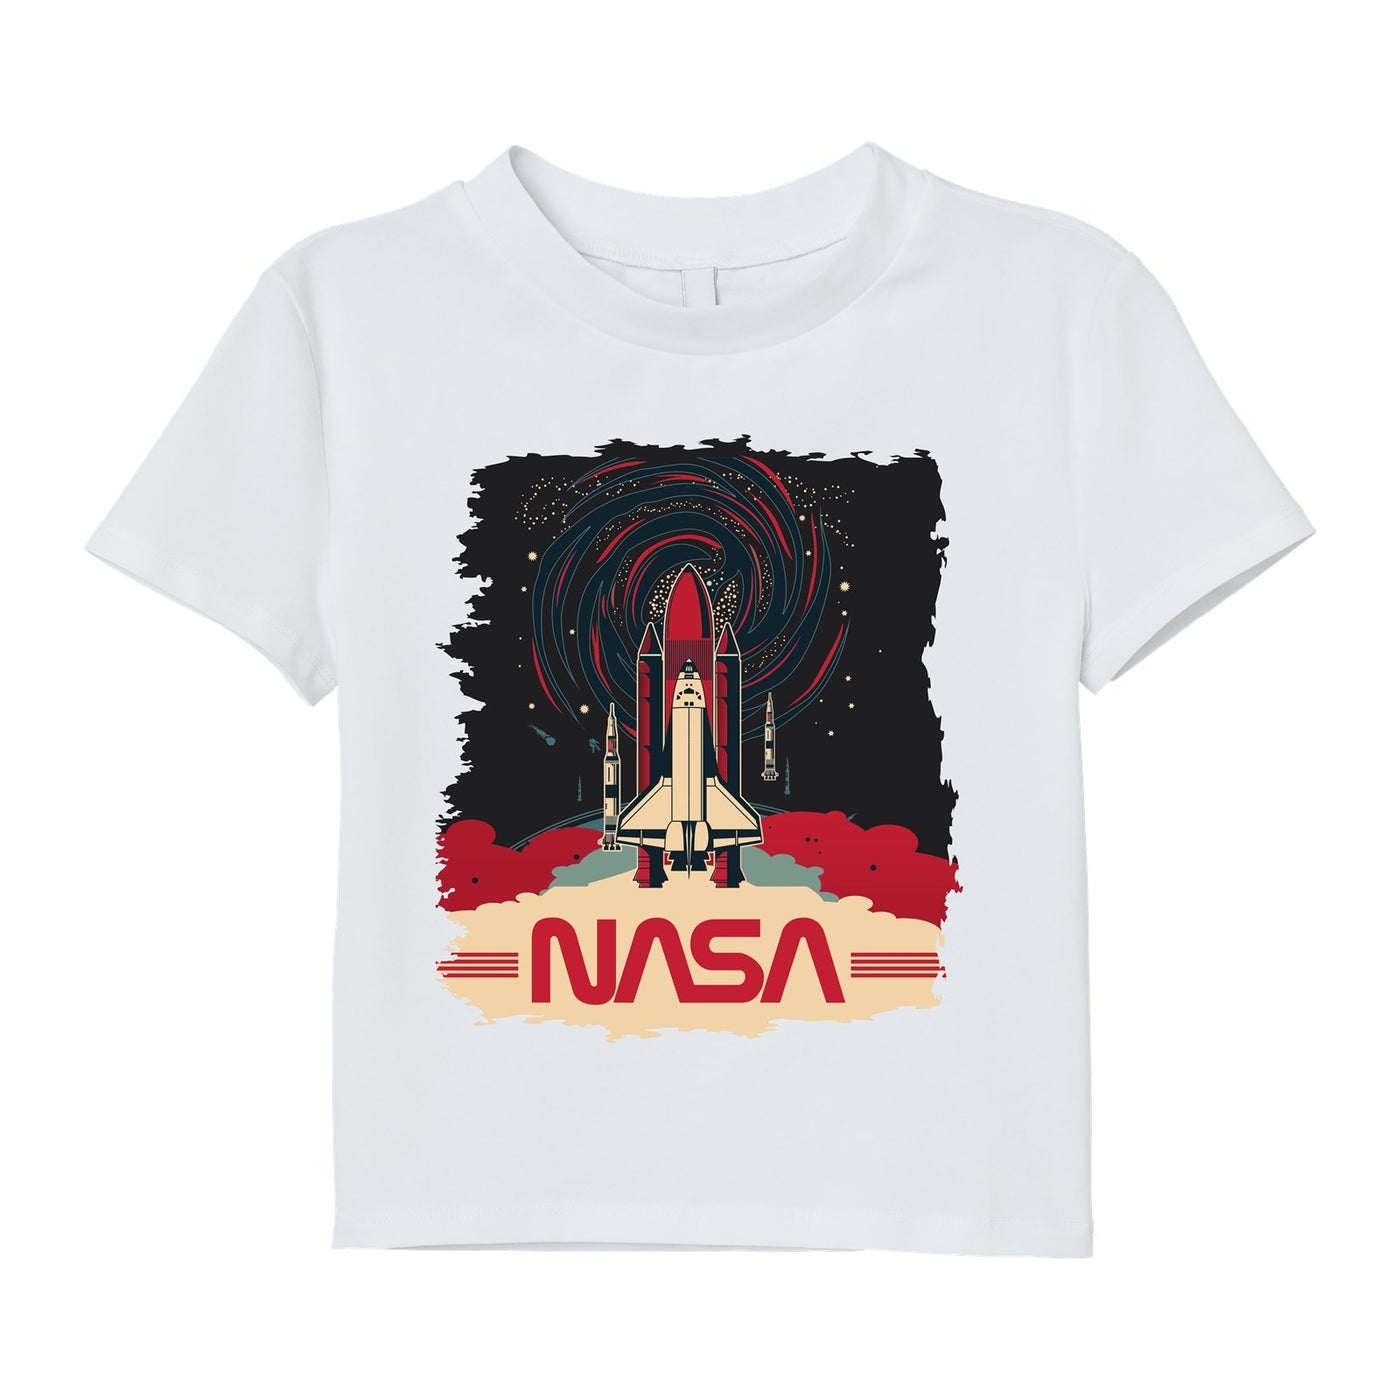 Bild: T-Shirt Kinder - NASA Space Shuttle Geschenkidee